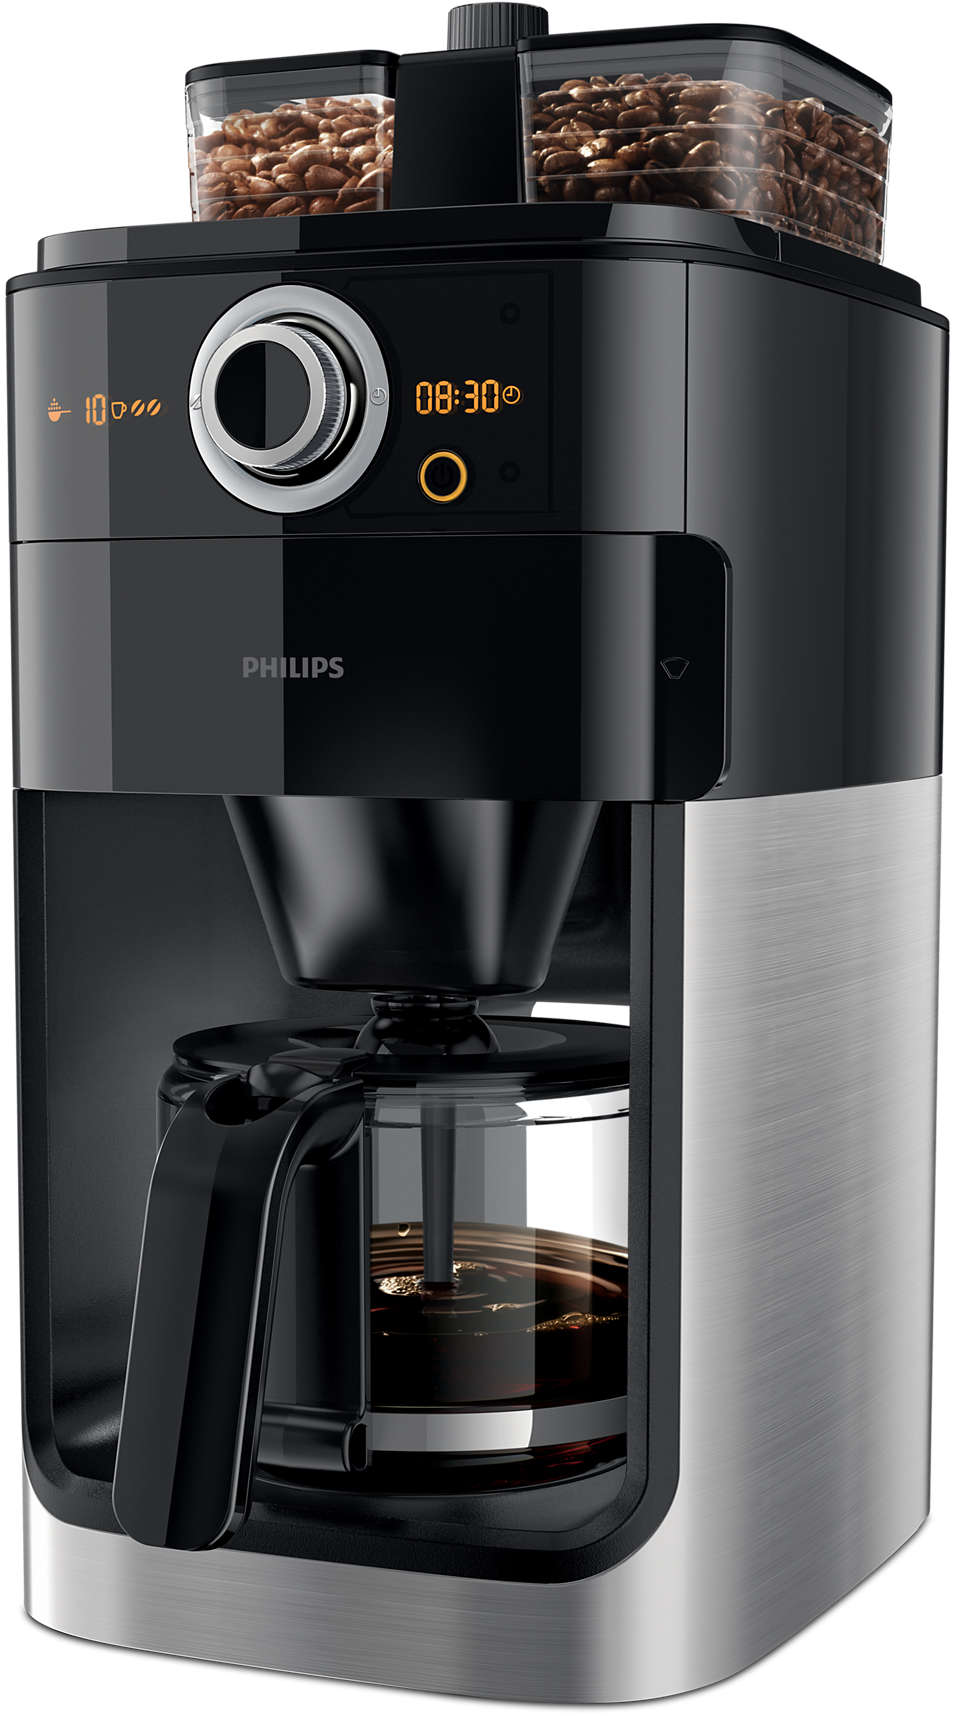 Philips Grind & Brew Coffee Maker - Black - HD7762